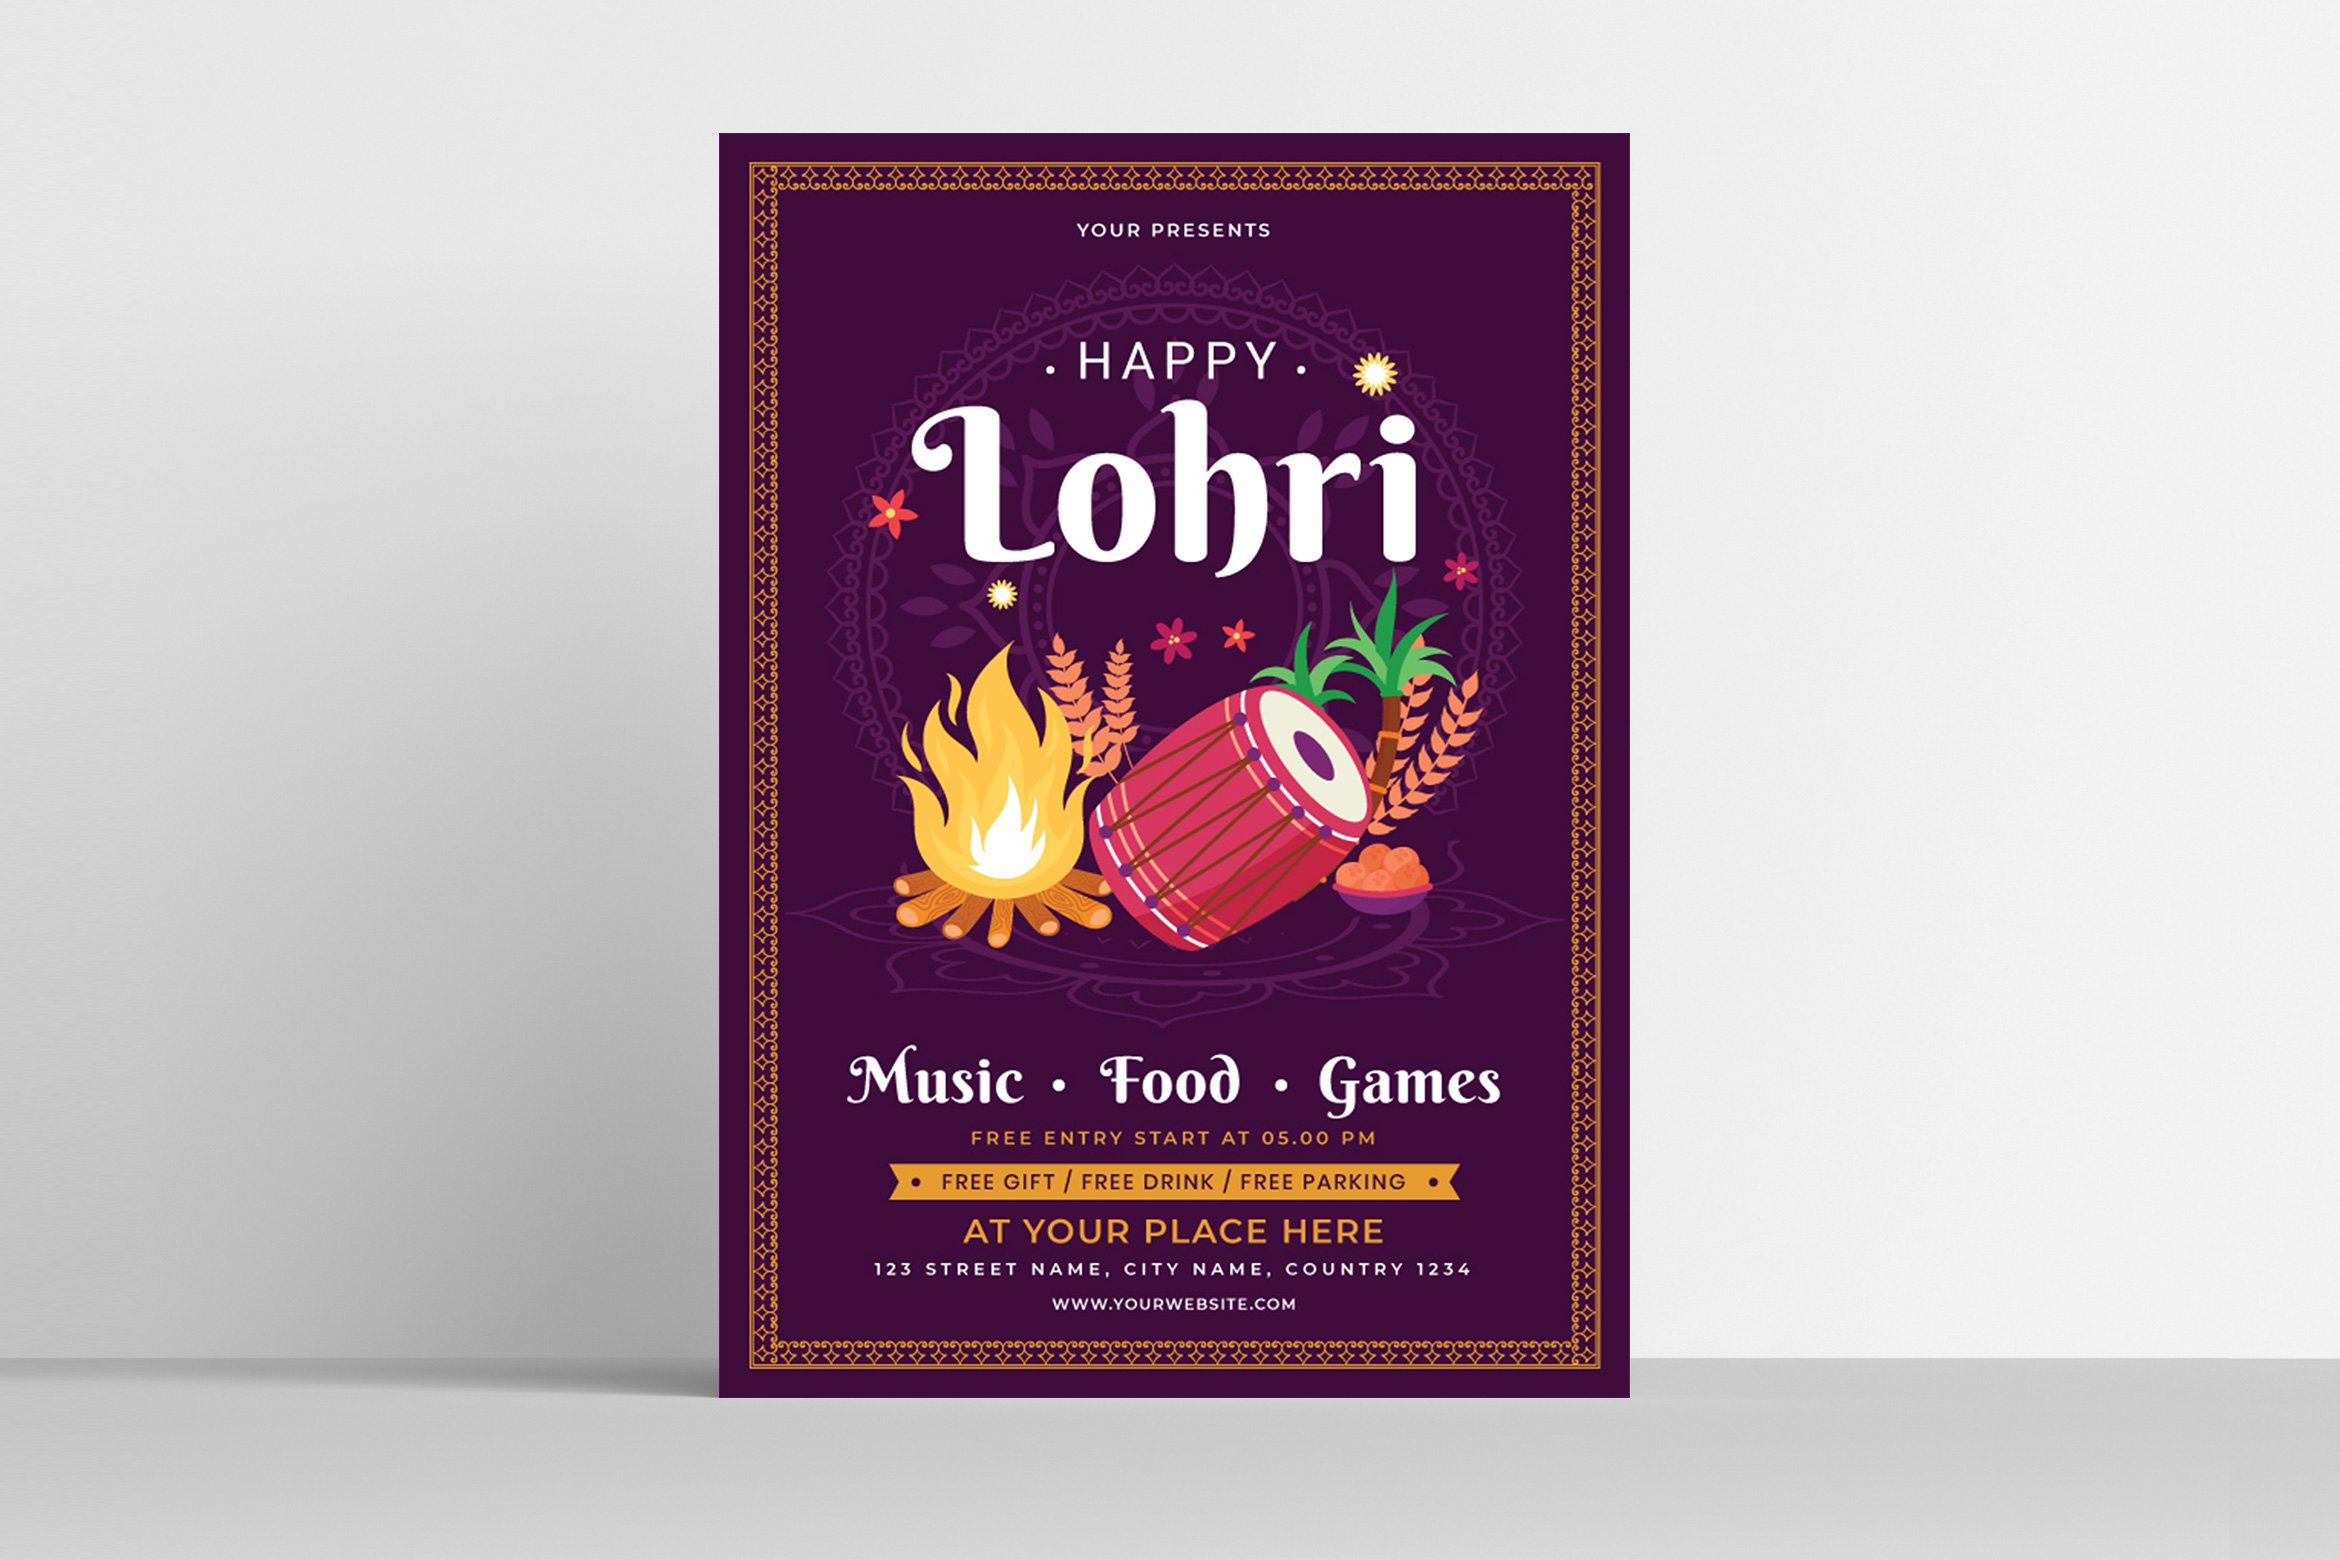 Lohri Festival Flyer Template